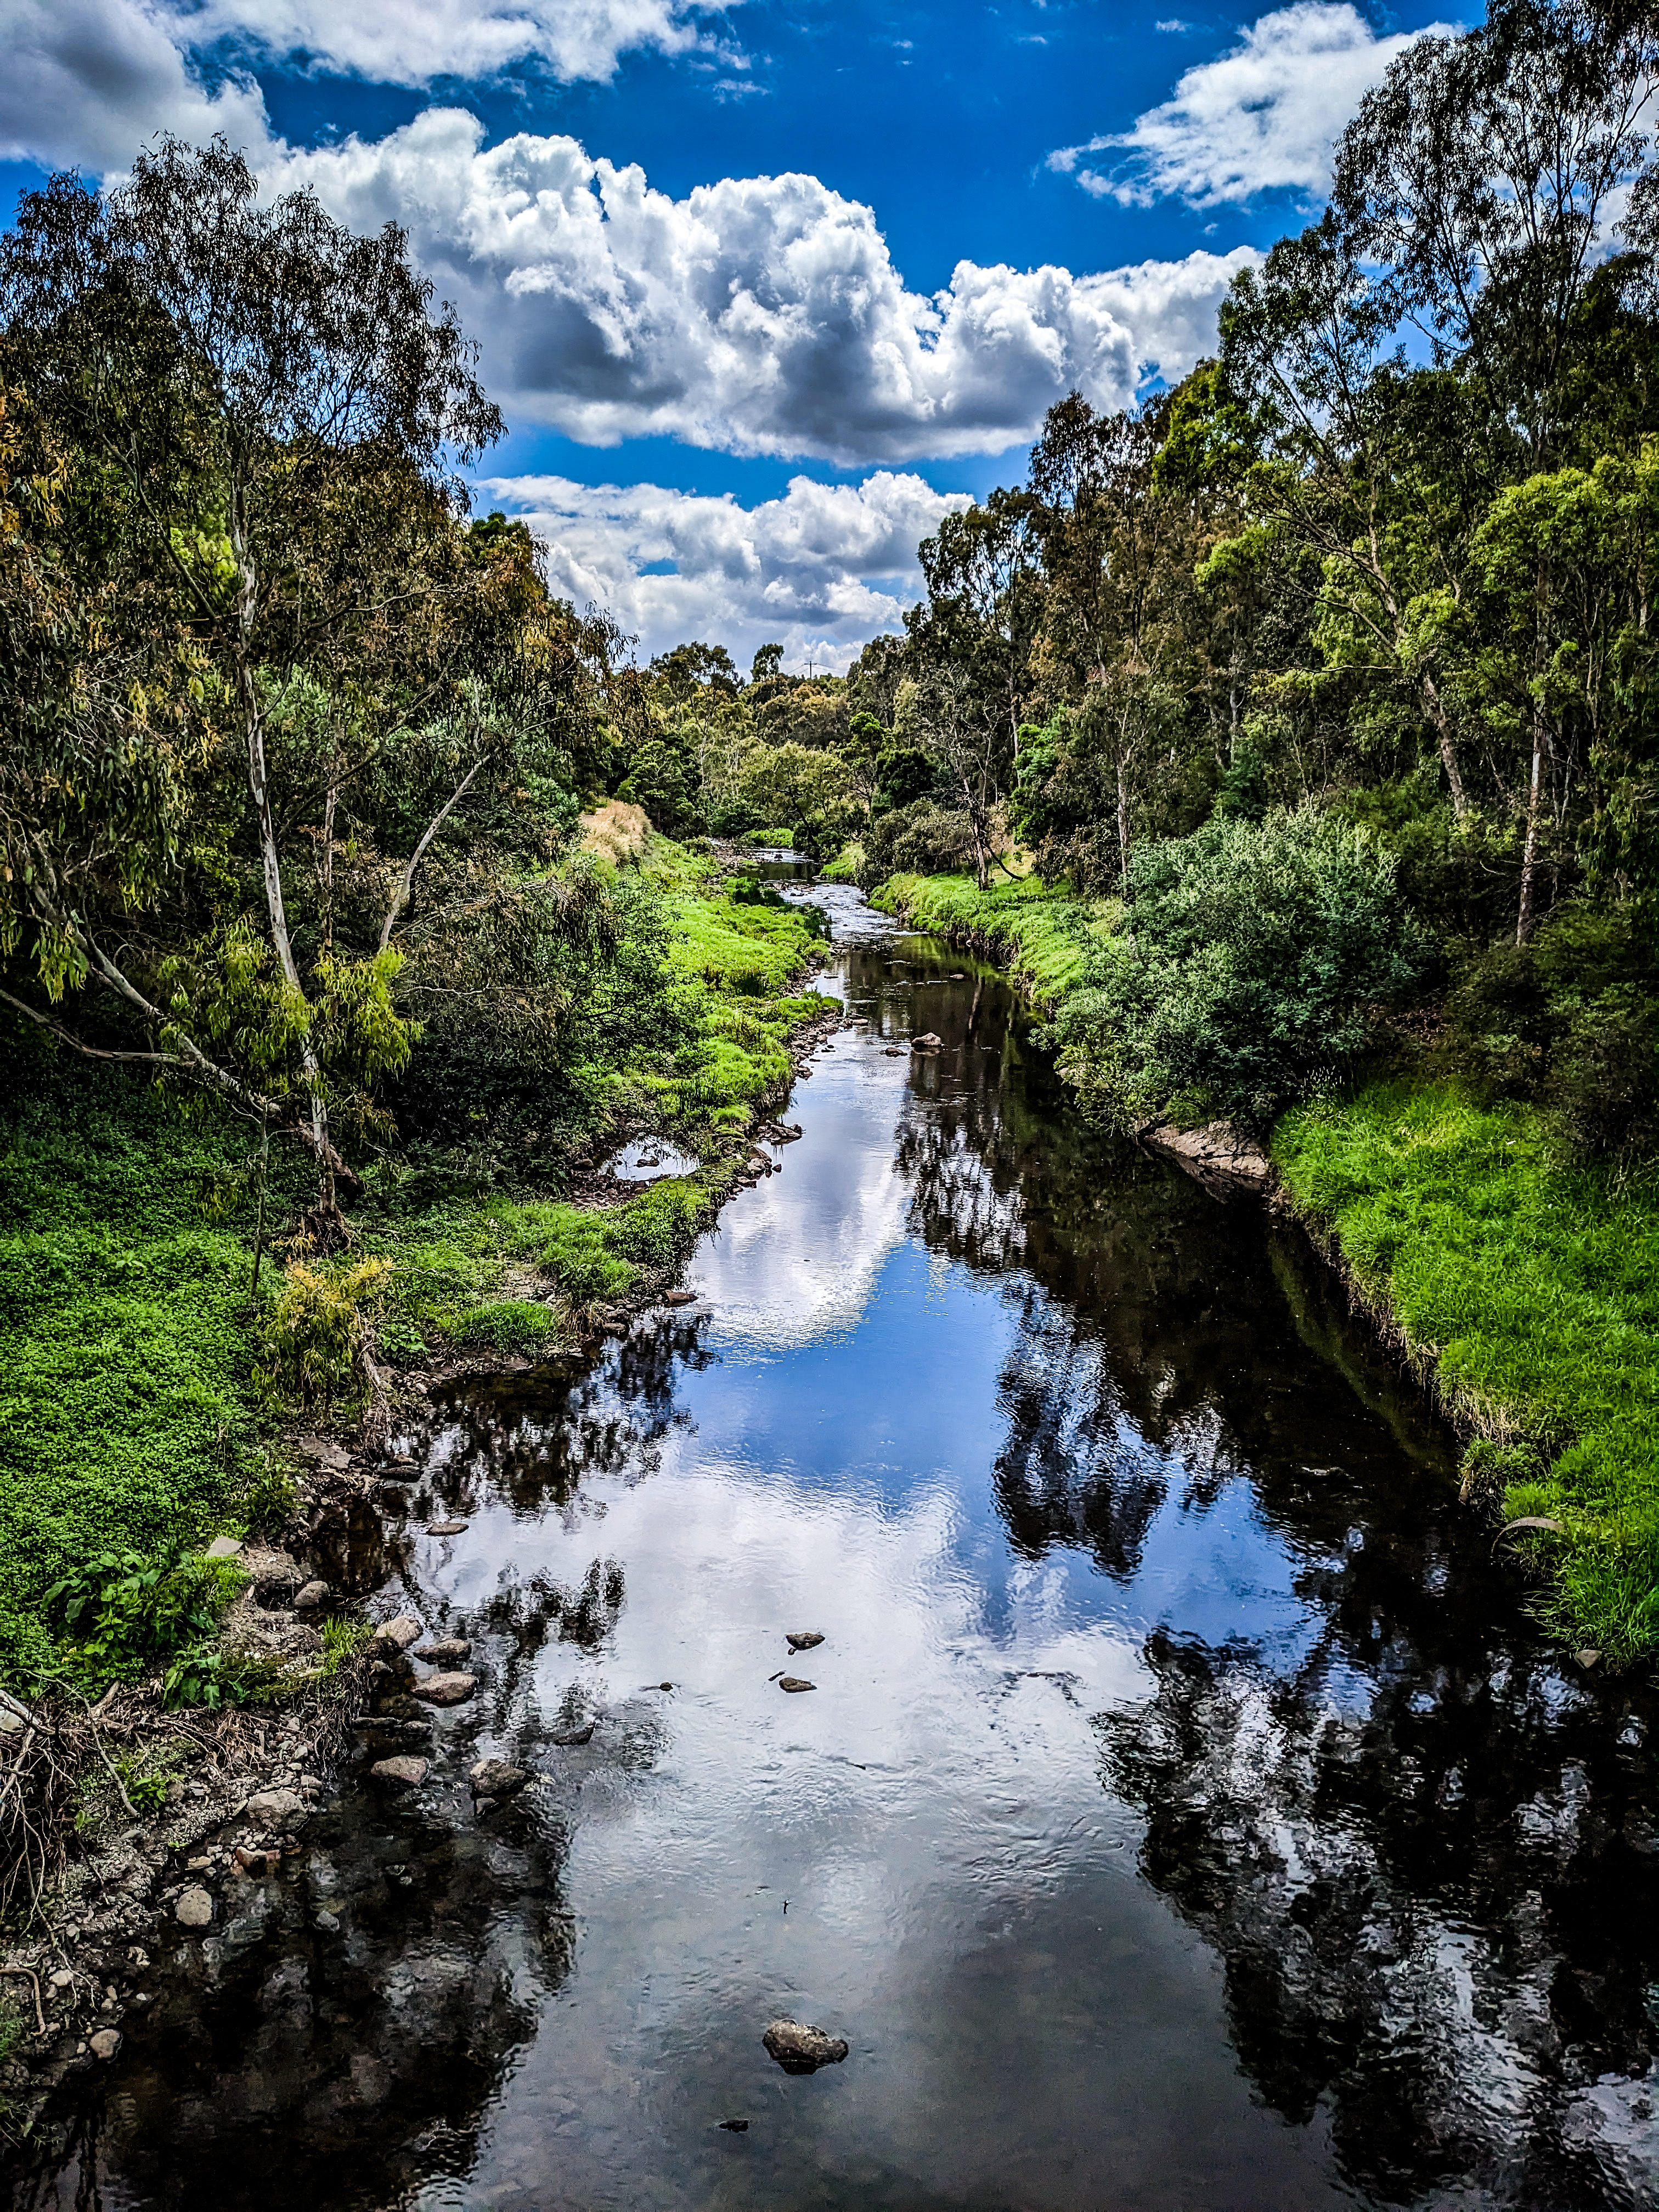 The amazing wilderness of Victoria, Australia